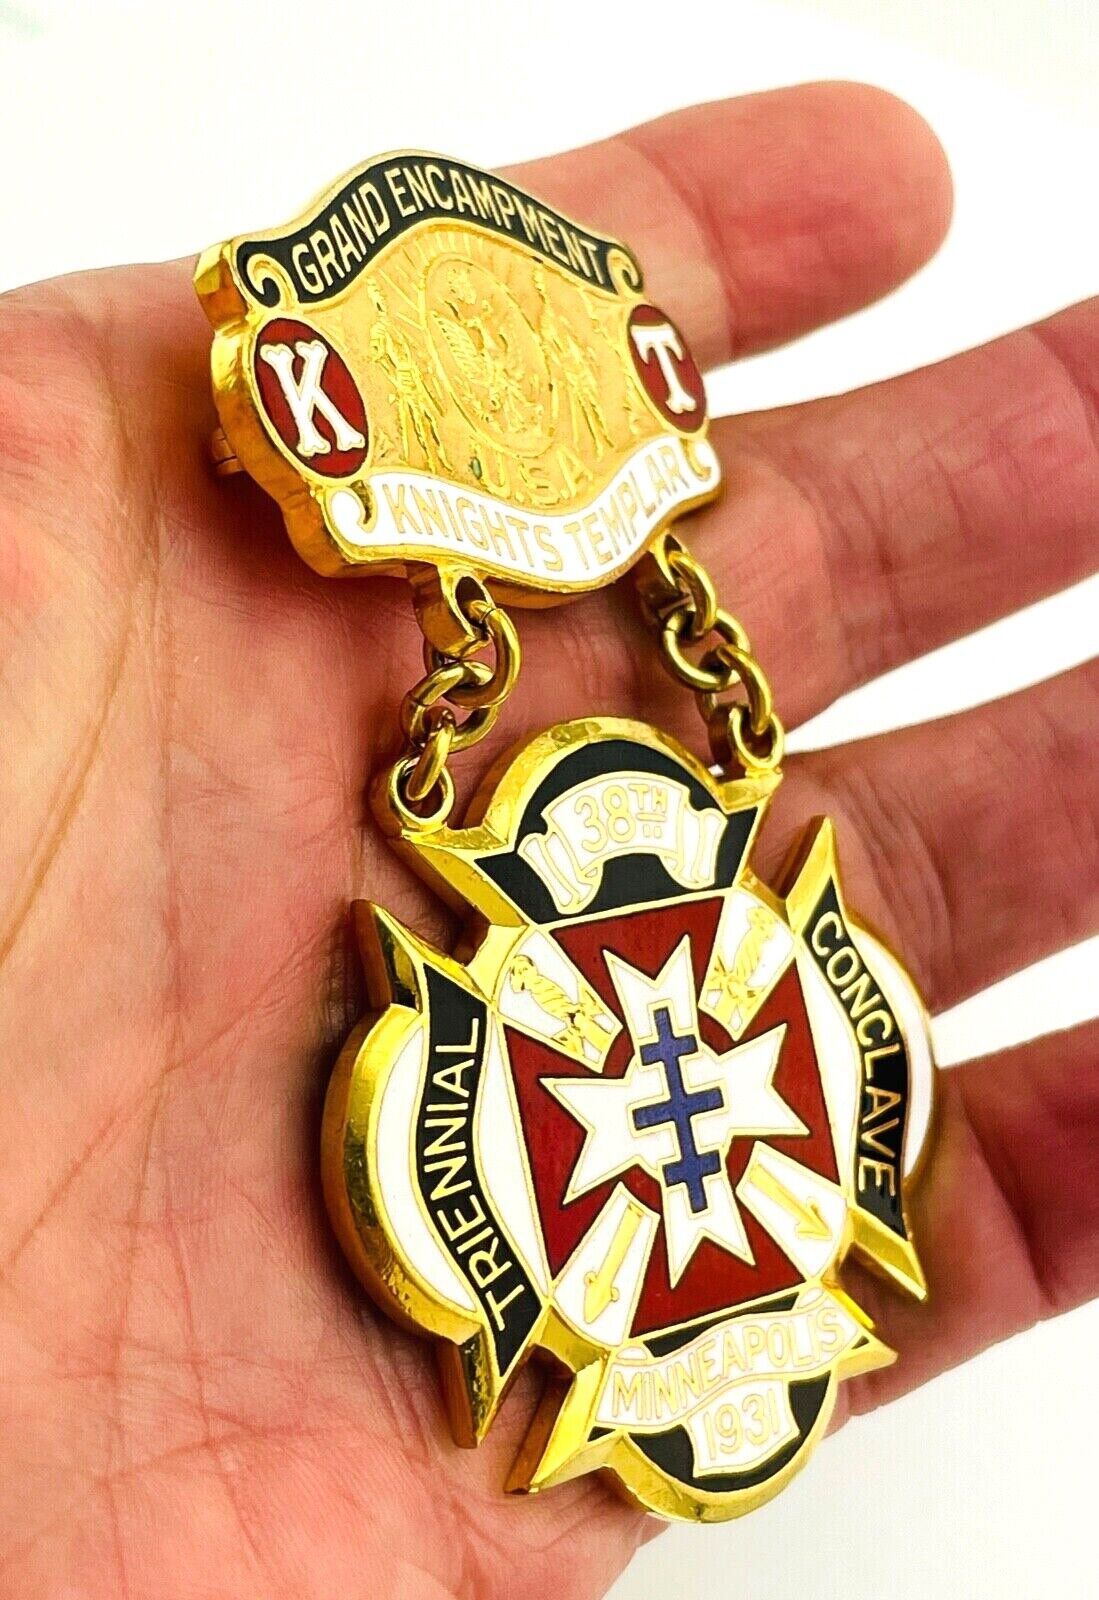 Antique Knights Templar Grand Encampment Triennial Conclave Pin Medal Badge 1931